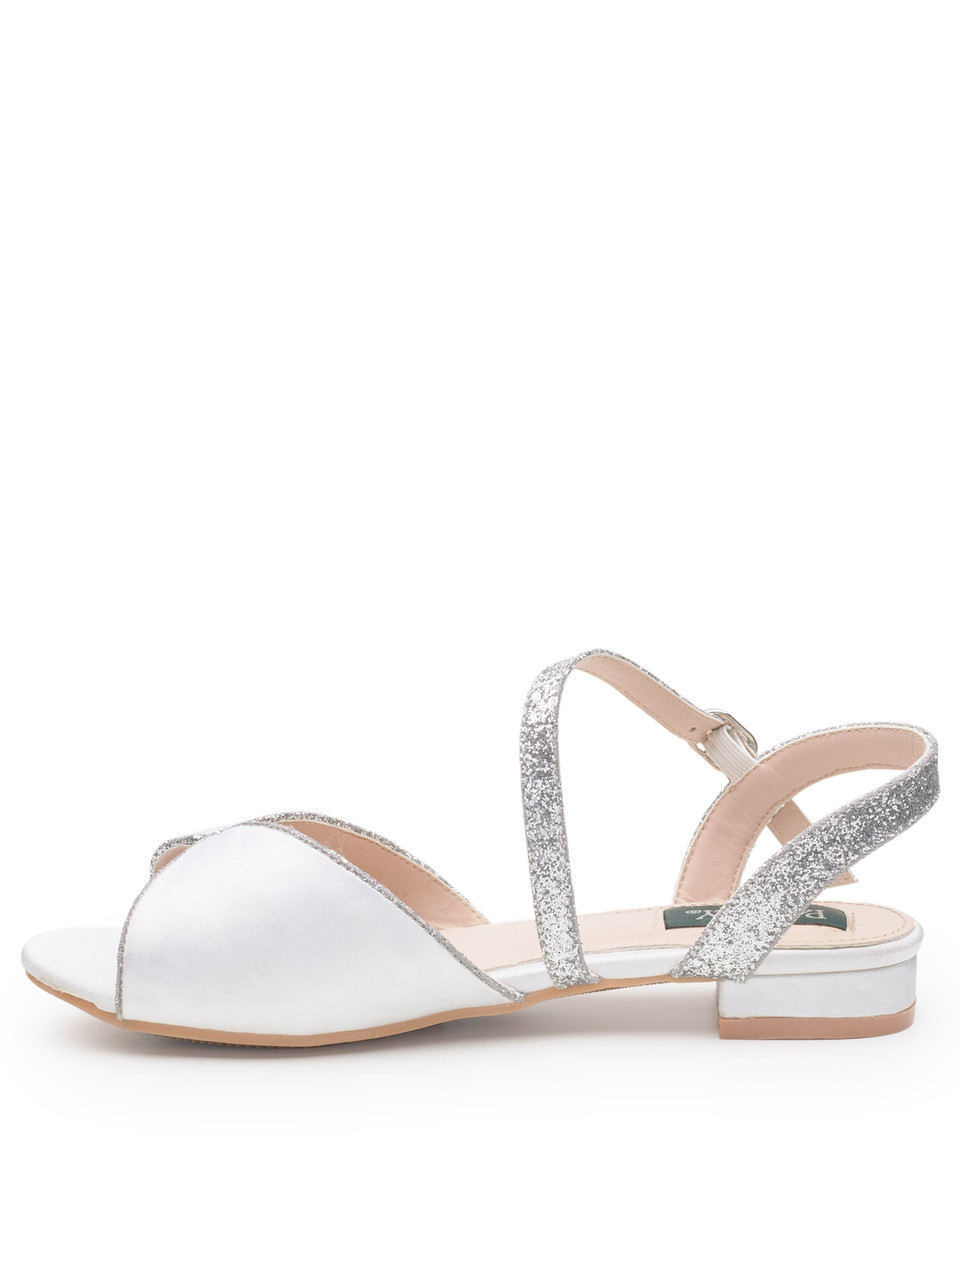 Girls white shoes | Girls white bridesmaid shoes | Paisley of London ...